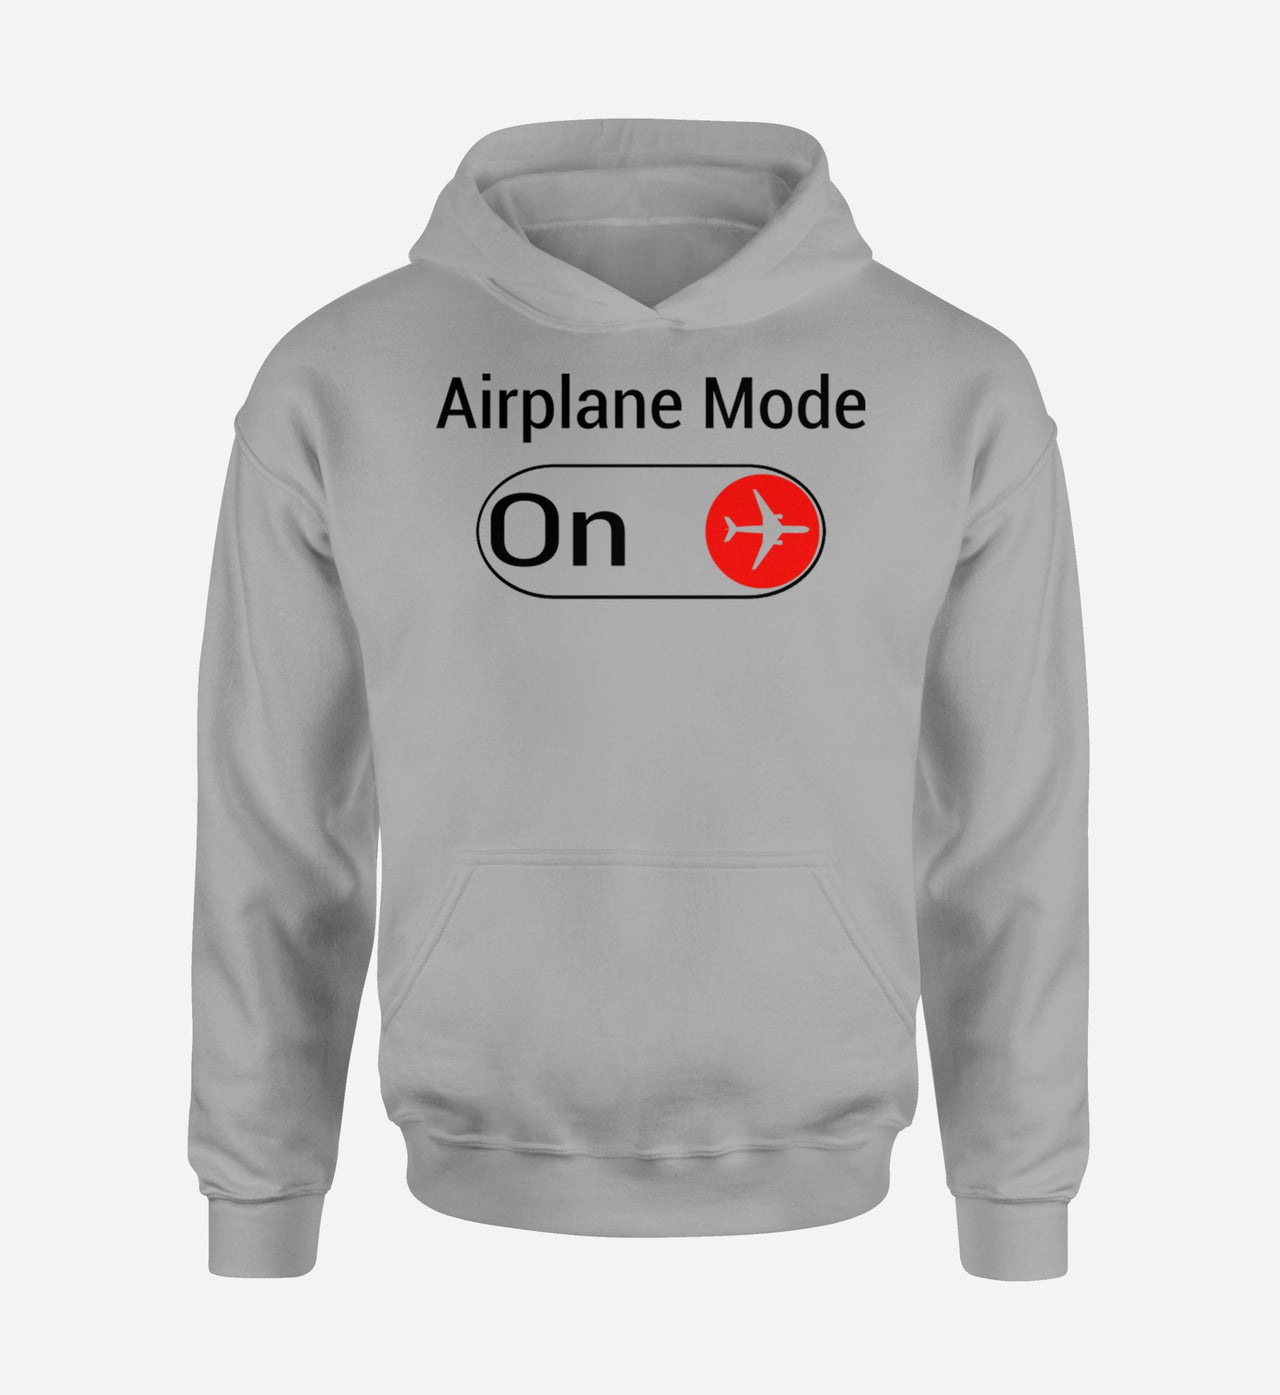 Airplane Mode On Designed Hoodies